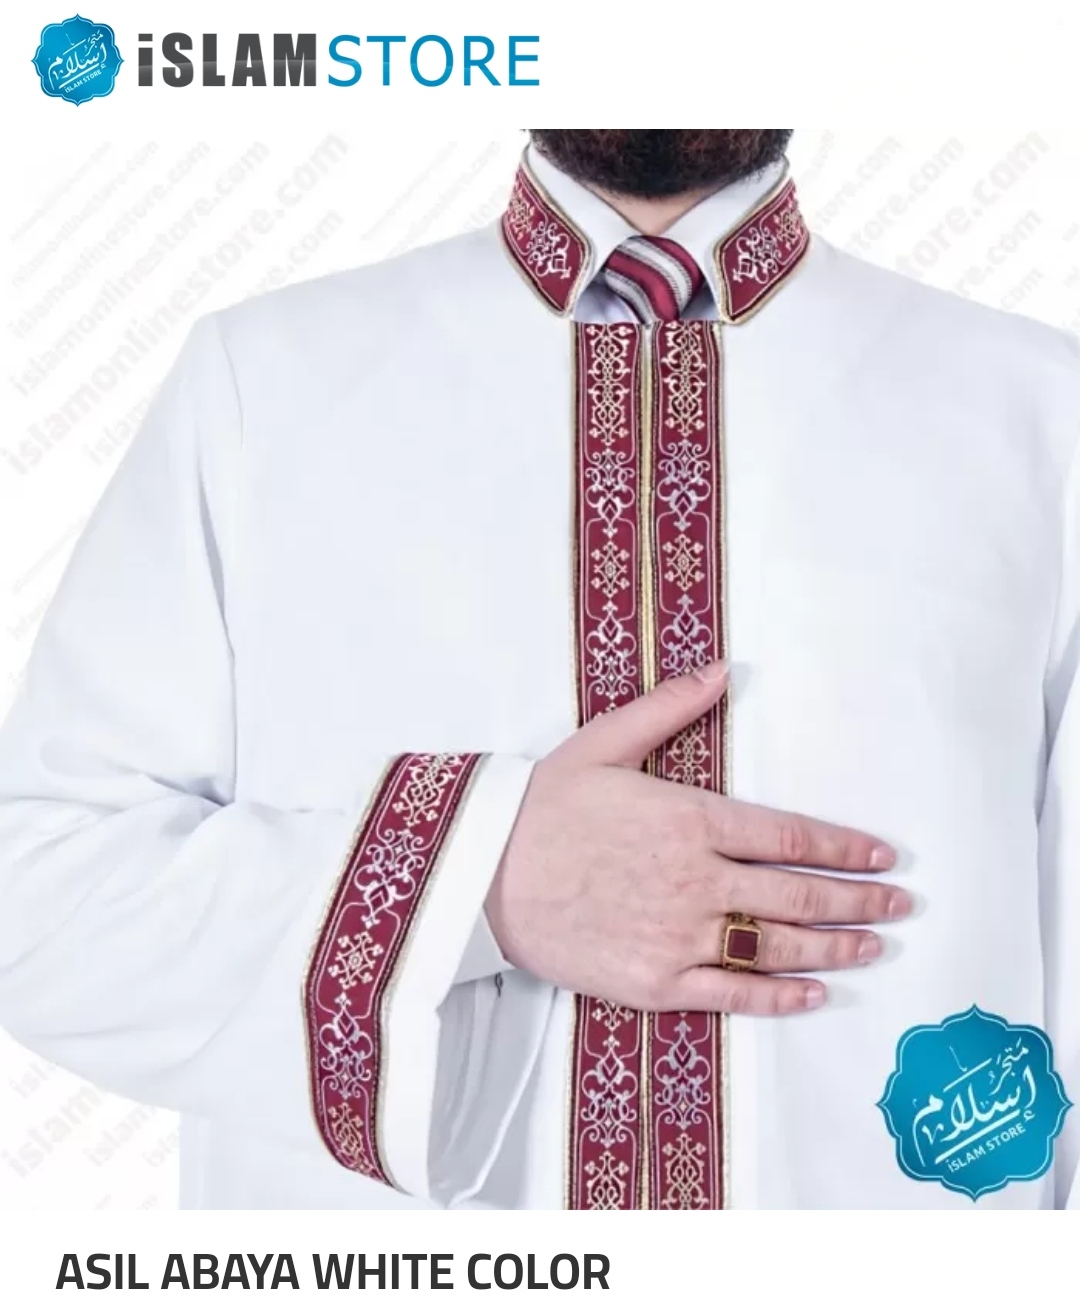 Asil Abaya White Color